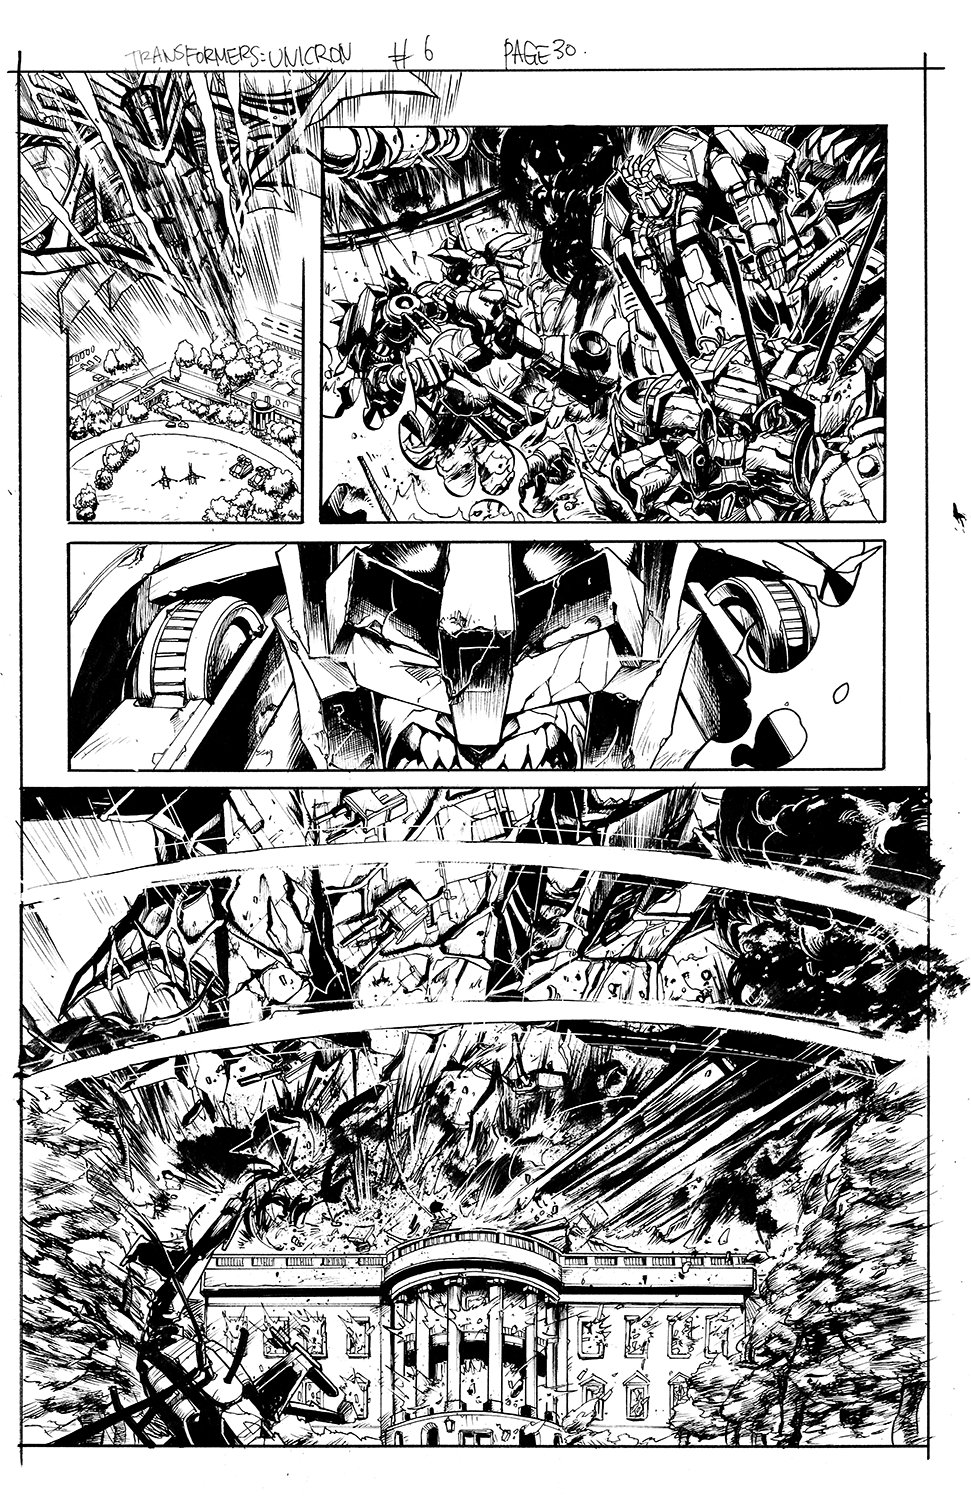 Transformers: Unicron #6 Page 30